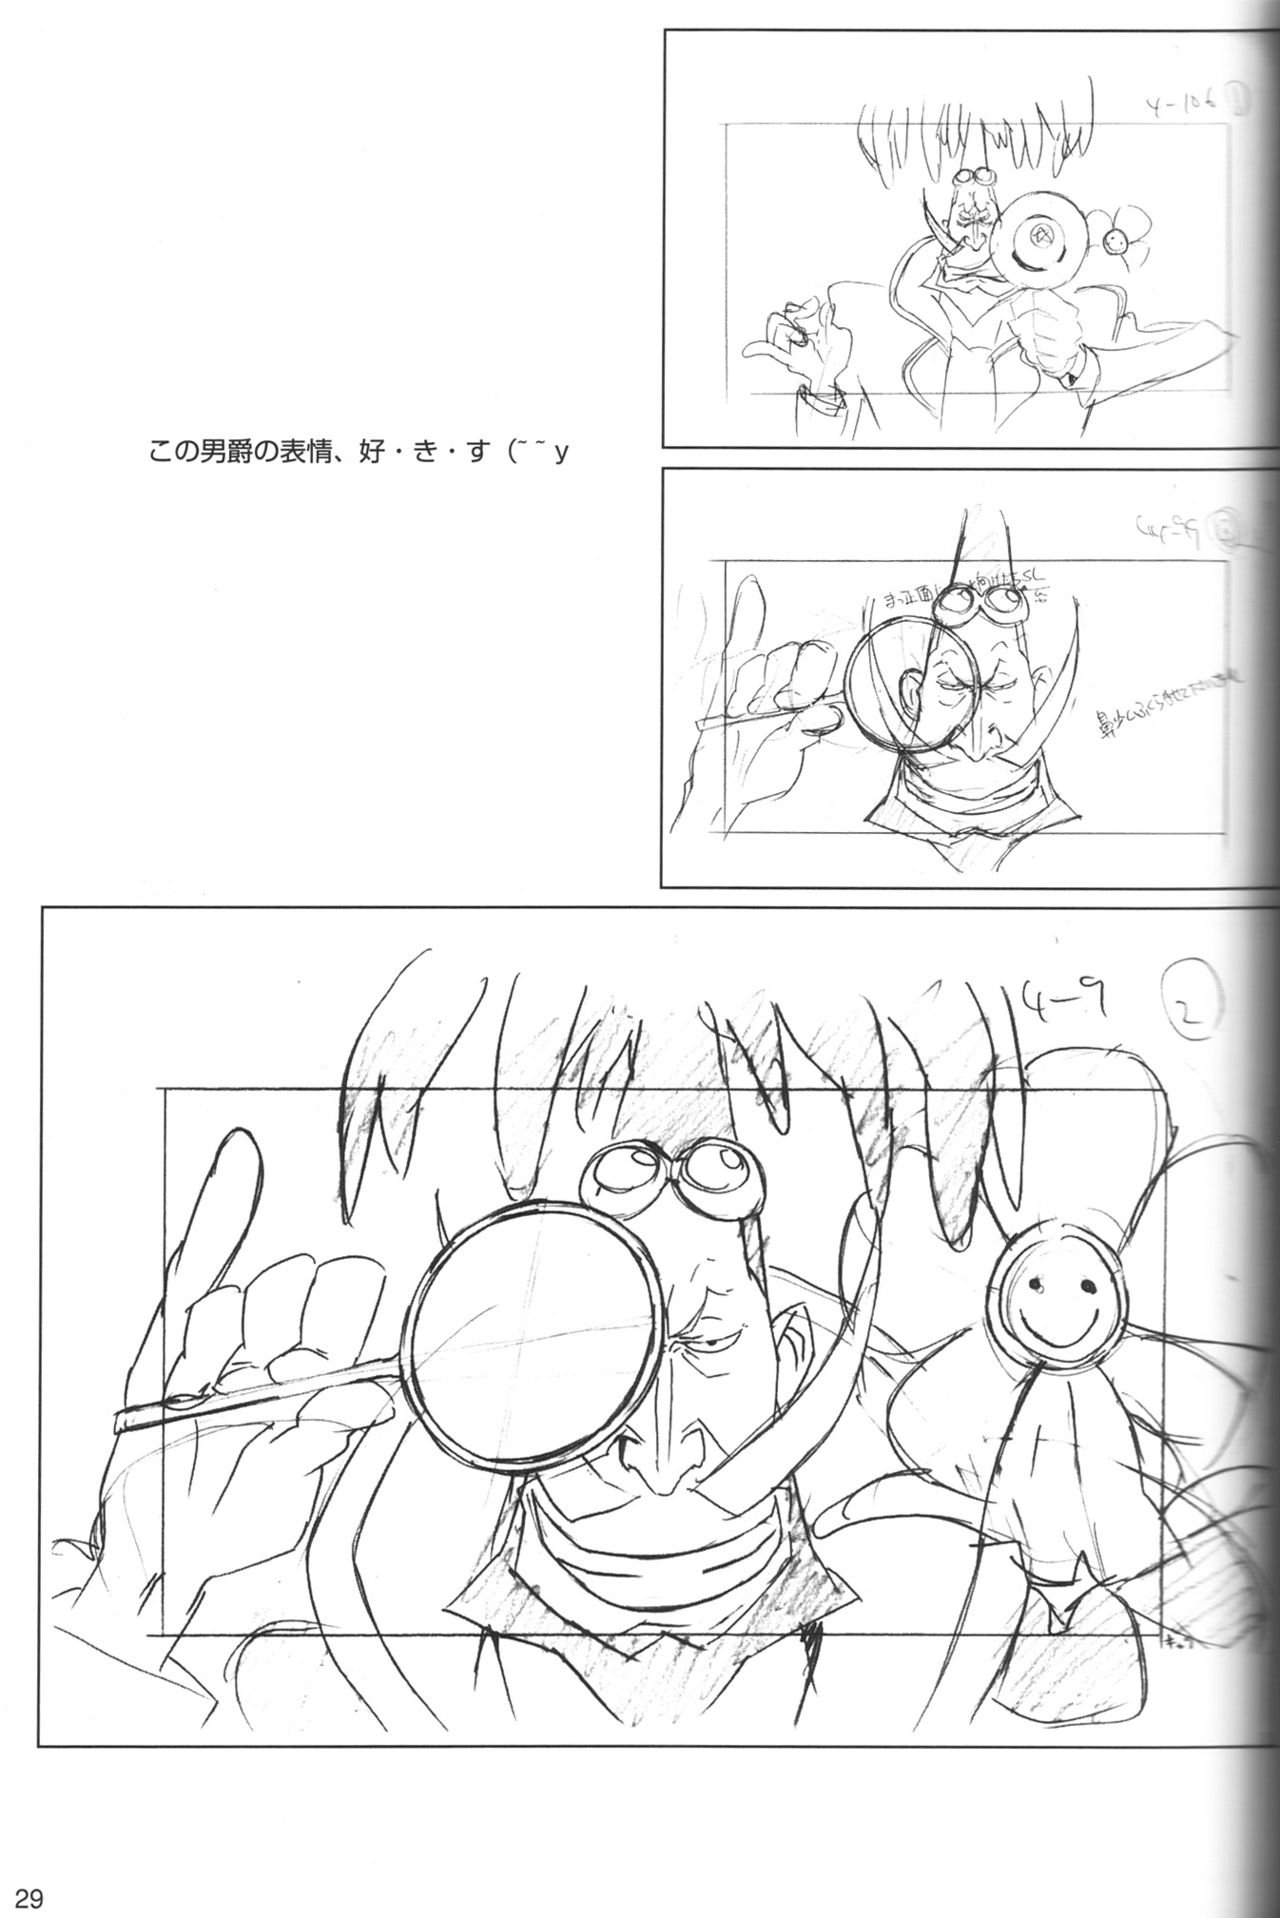 [Artbook] Sushio One Piece Movie 06 - Pencil Test and Design Book 27